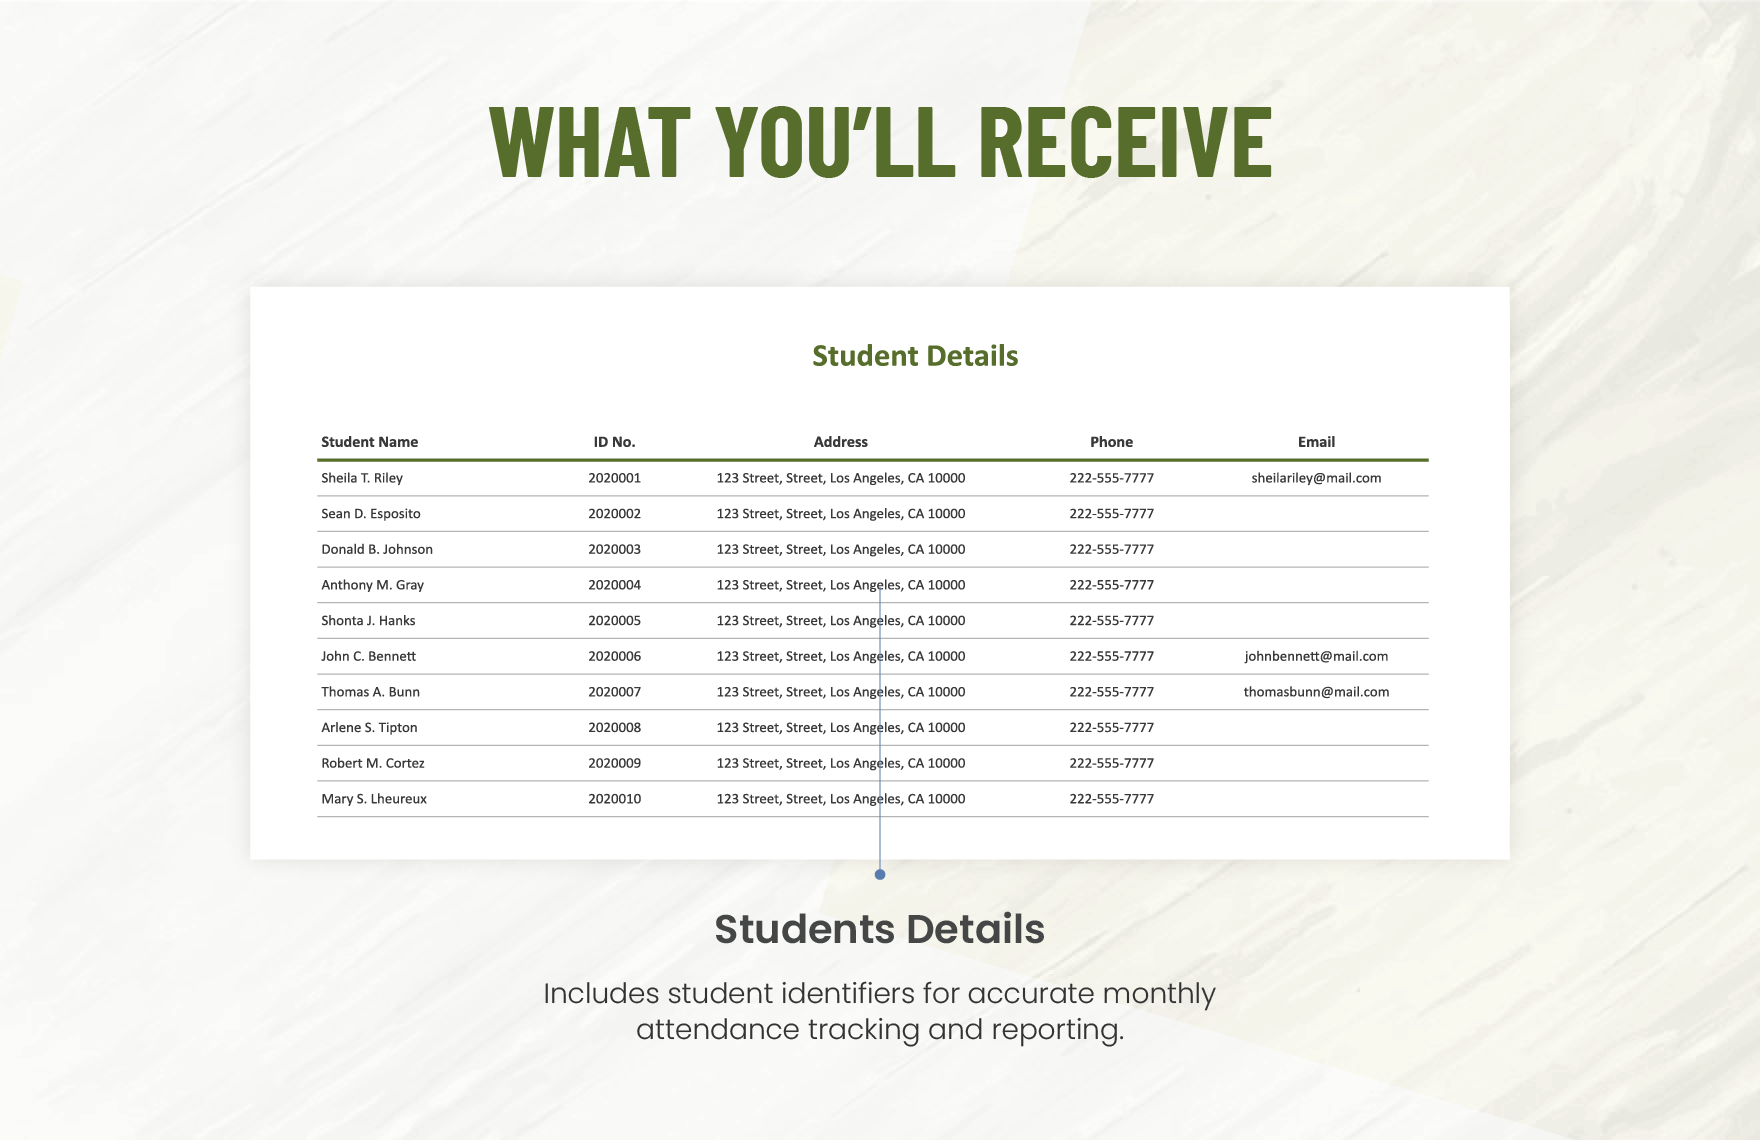 University Monthly Attendance Sheet Template